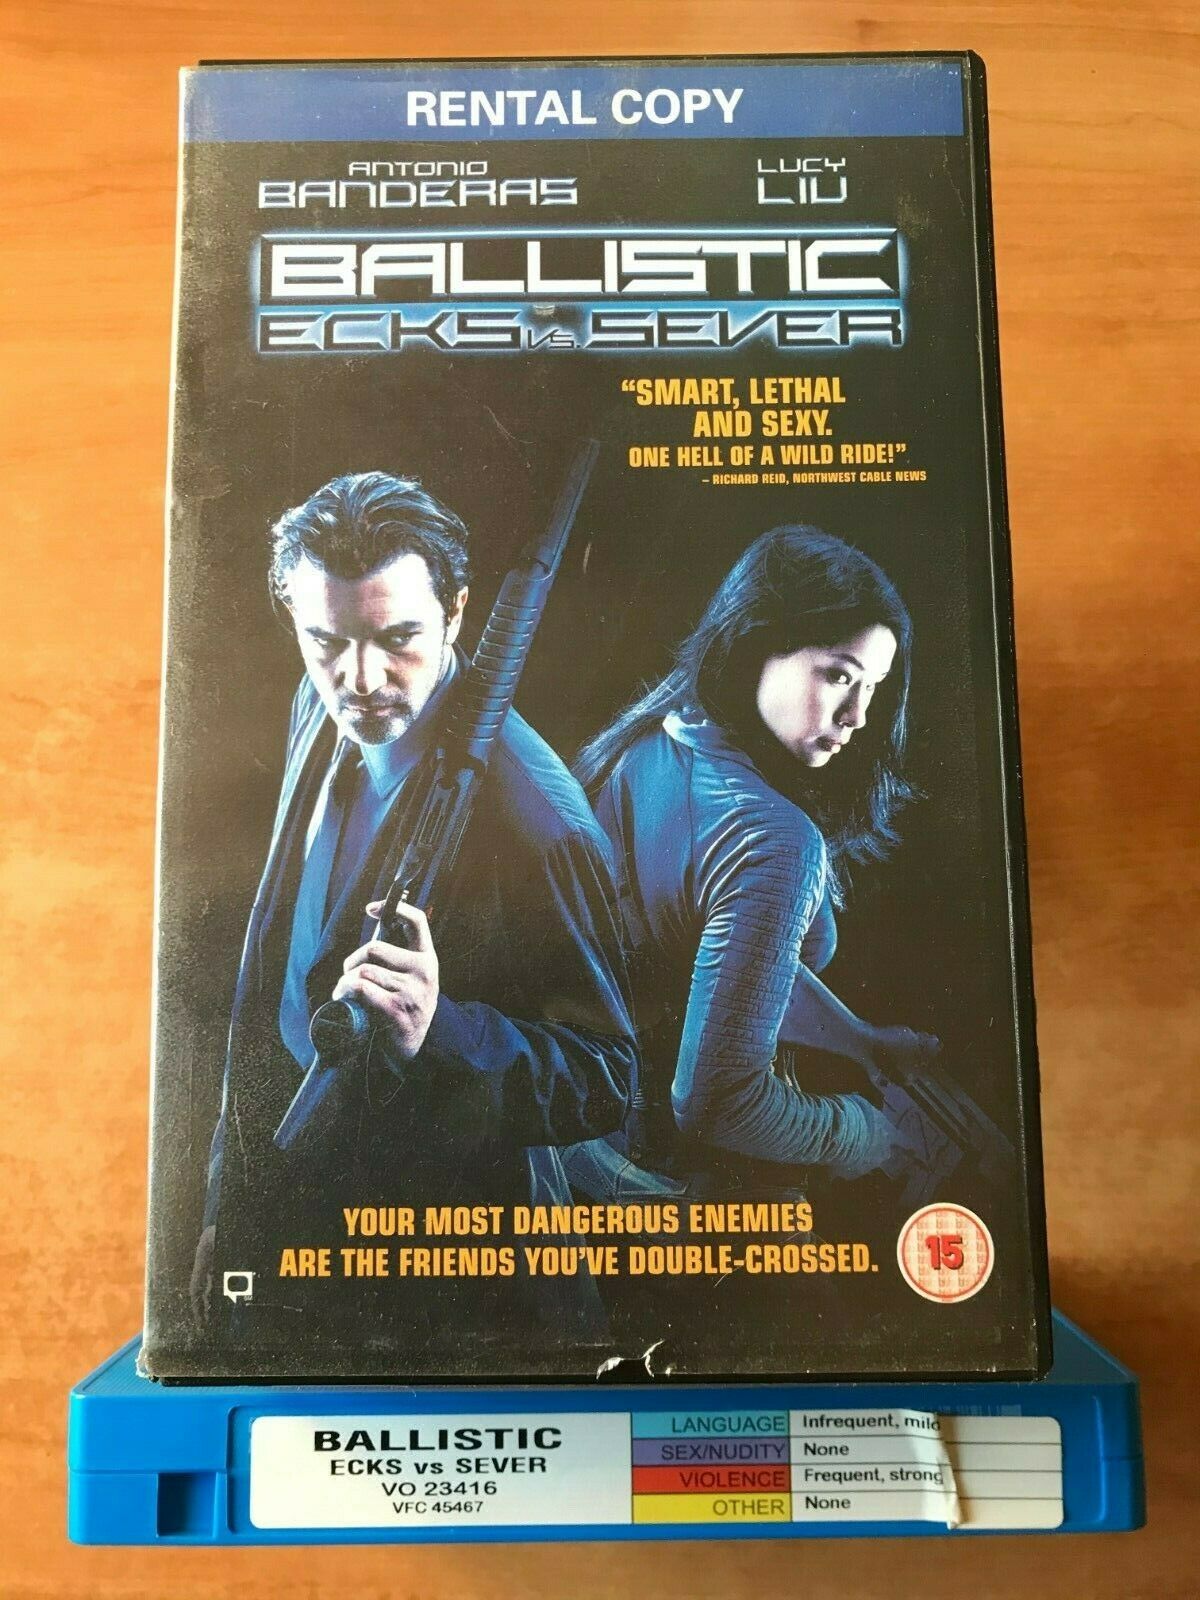 Ballistic - Ecks vs Sever - Lucy Lui / Banderas - Ex-Rental - Action Video - VHS-